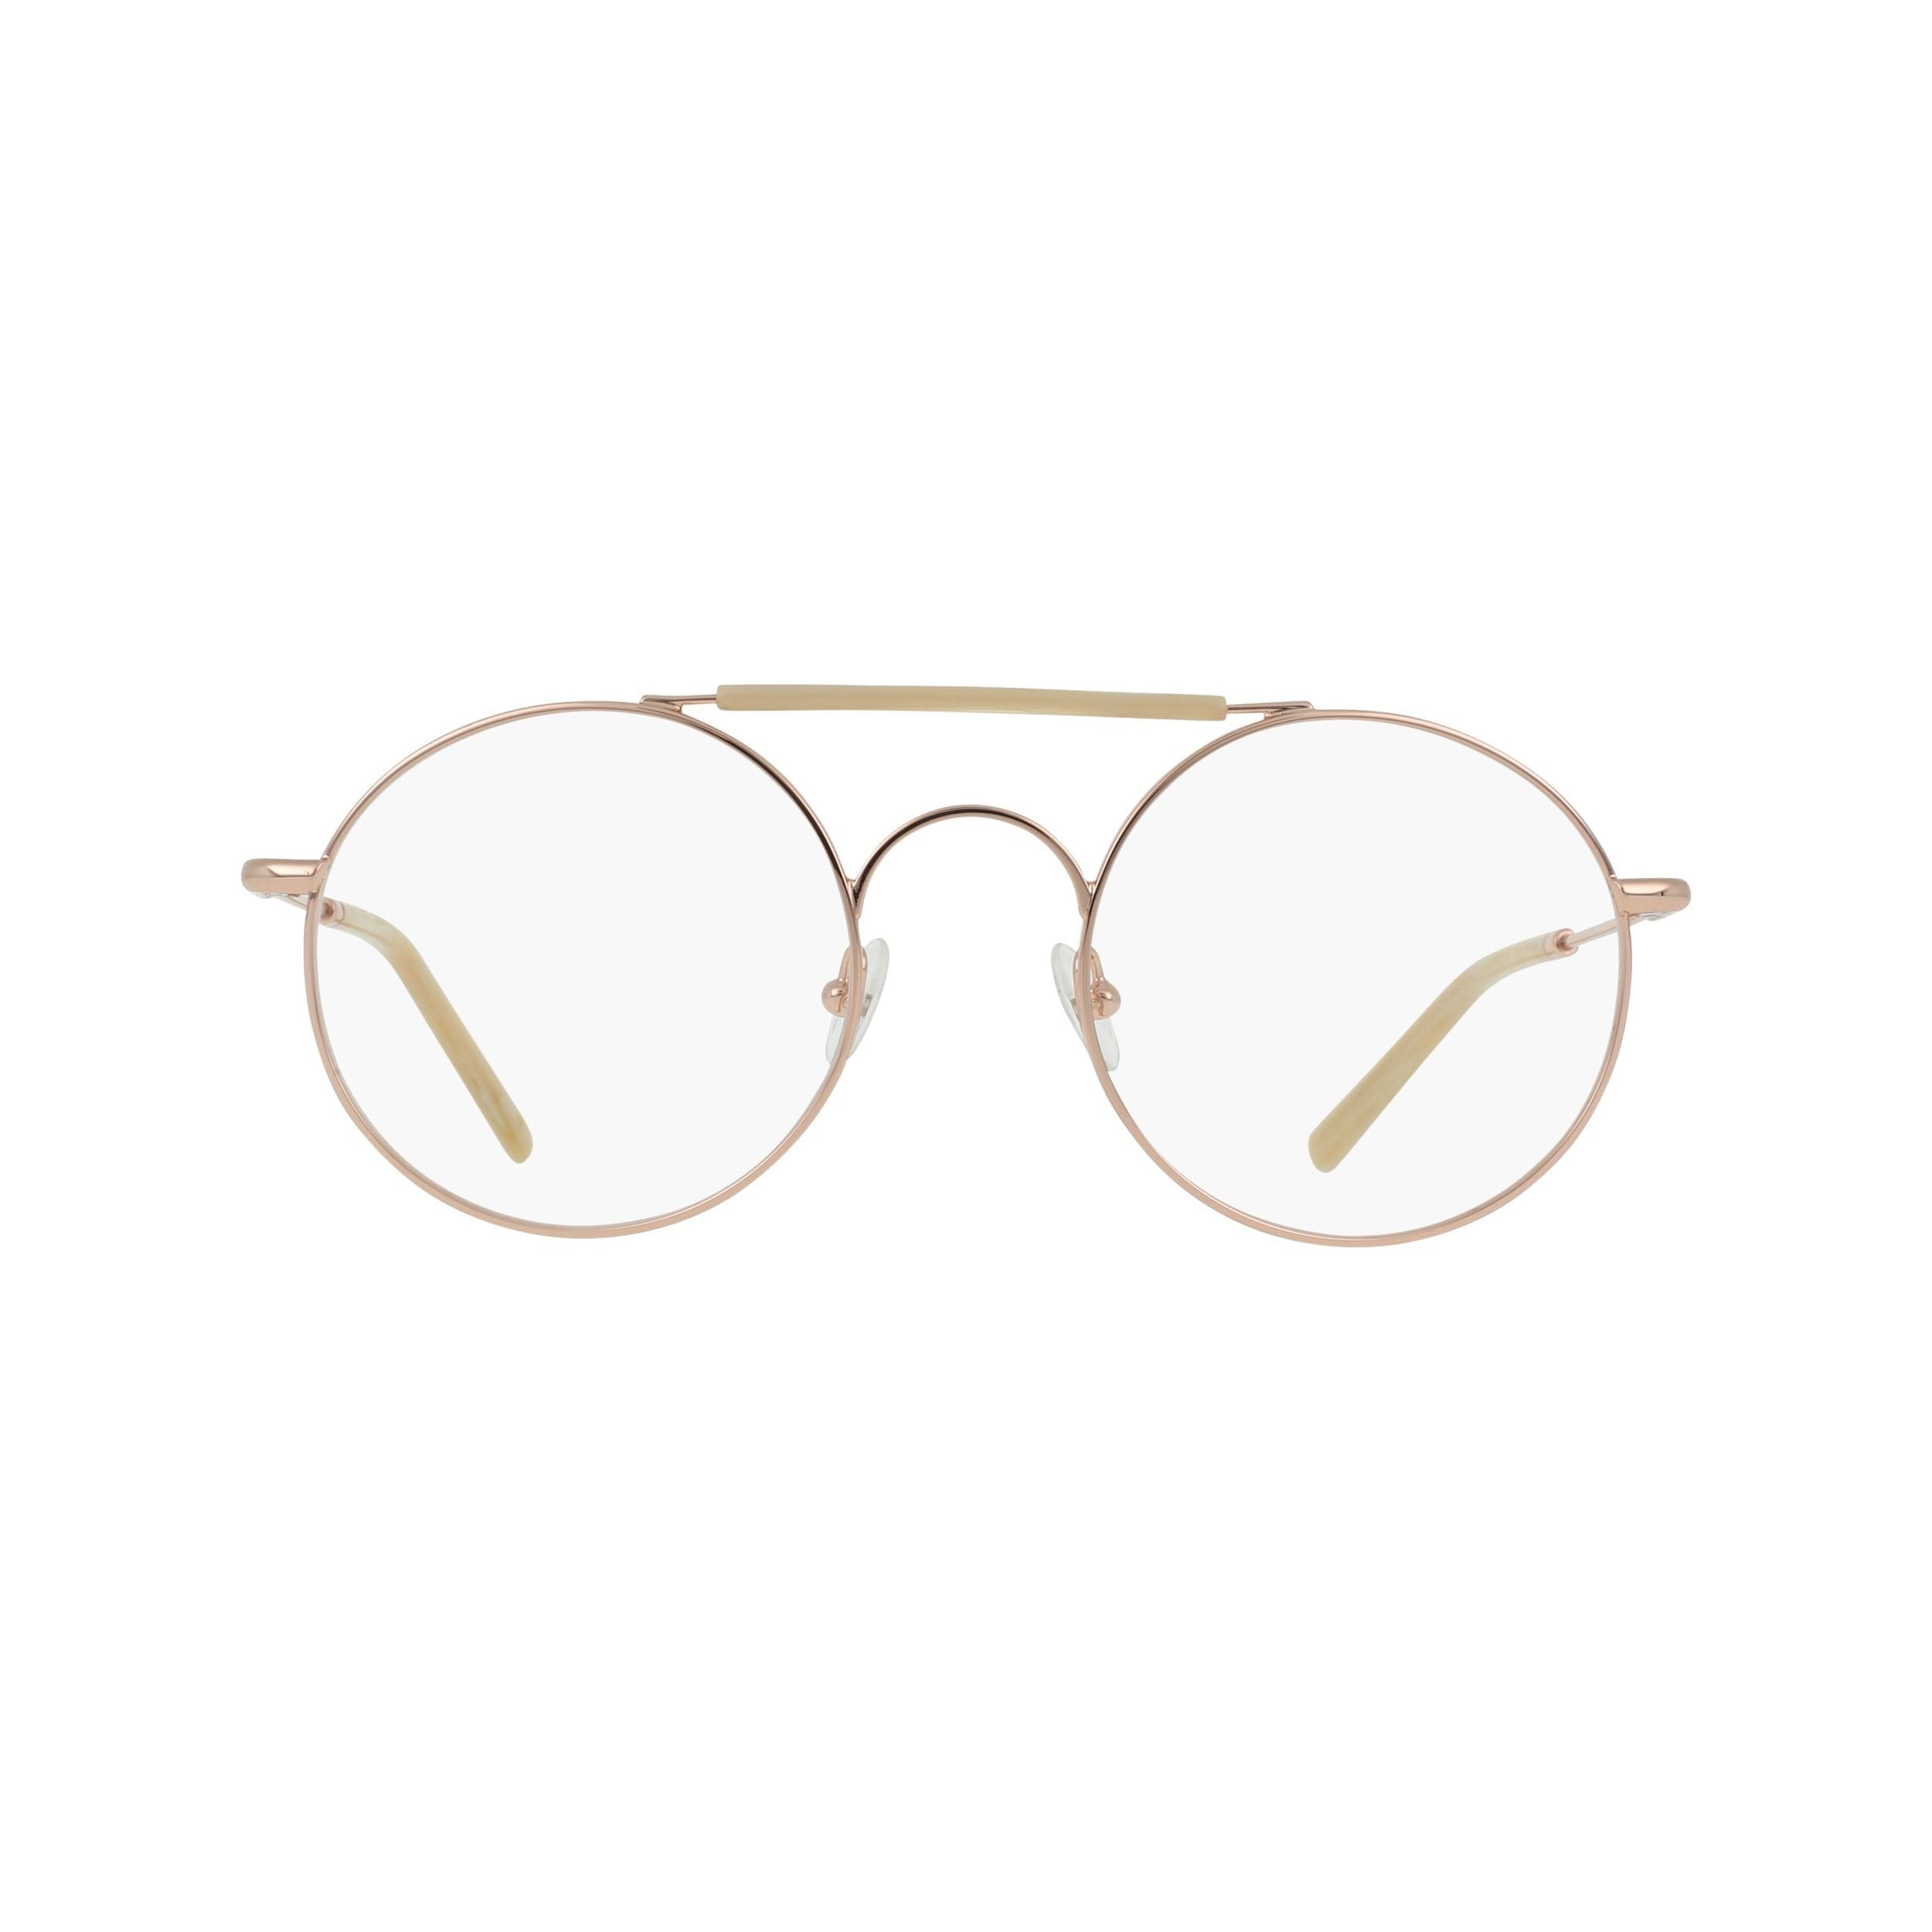 EAREADA Handmade Acetate Glasses Frame Small Retro Vintage Round Eyeglasses  (Black Fade) at Amazon Women's Clothing store